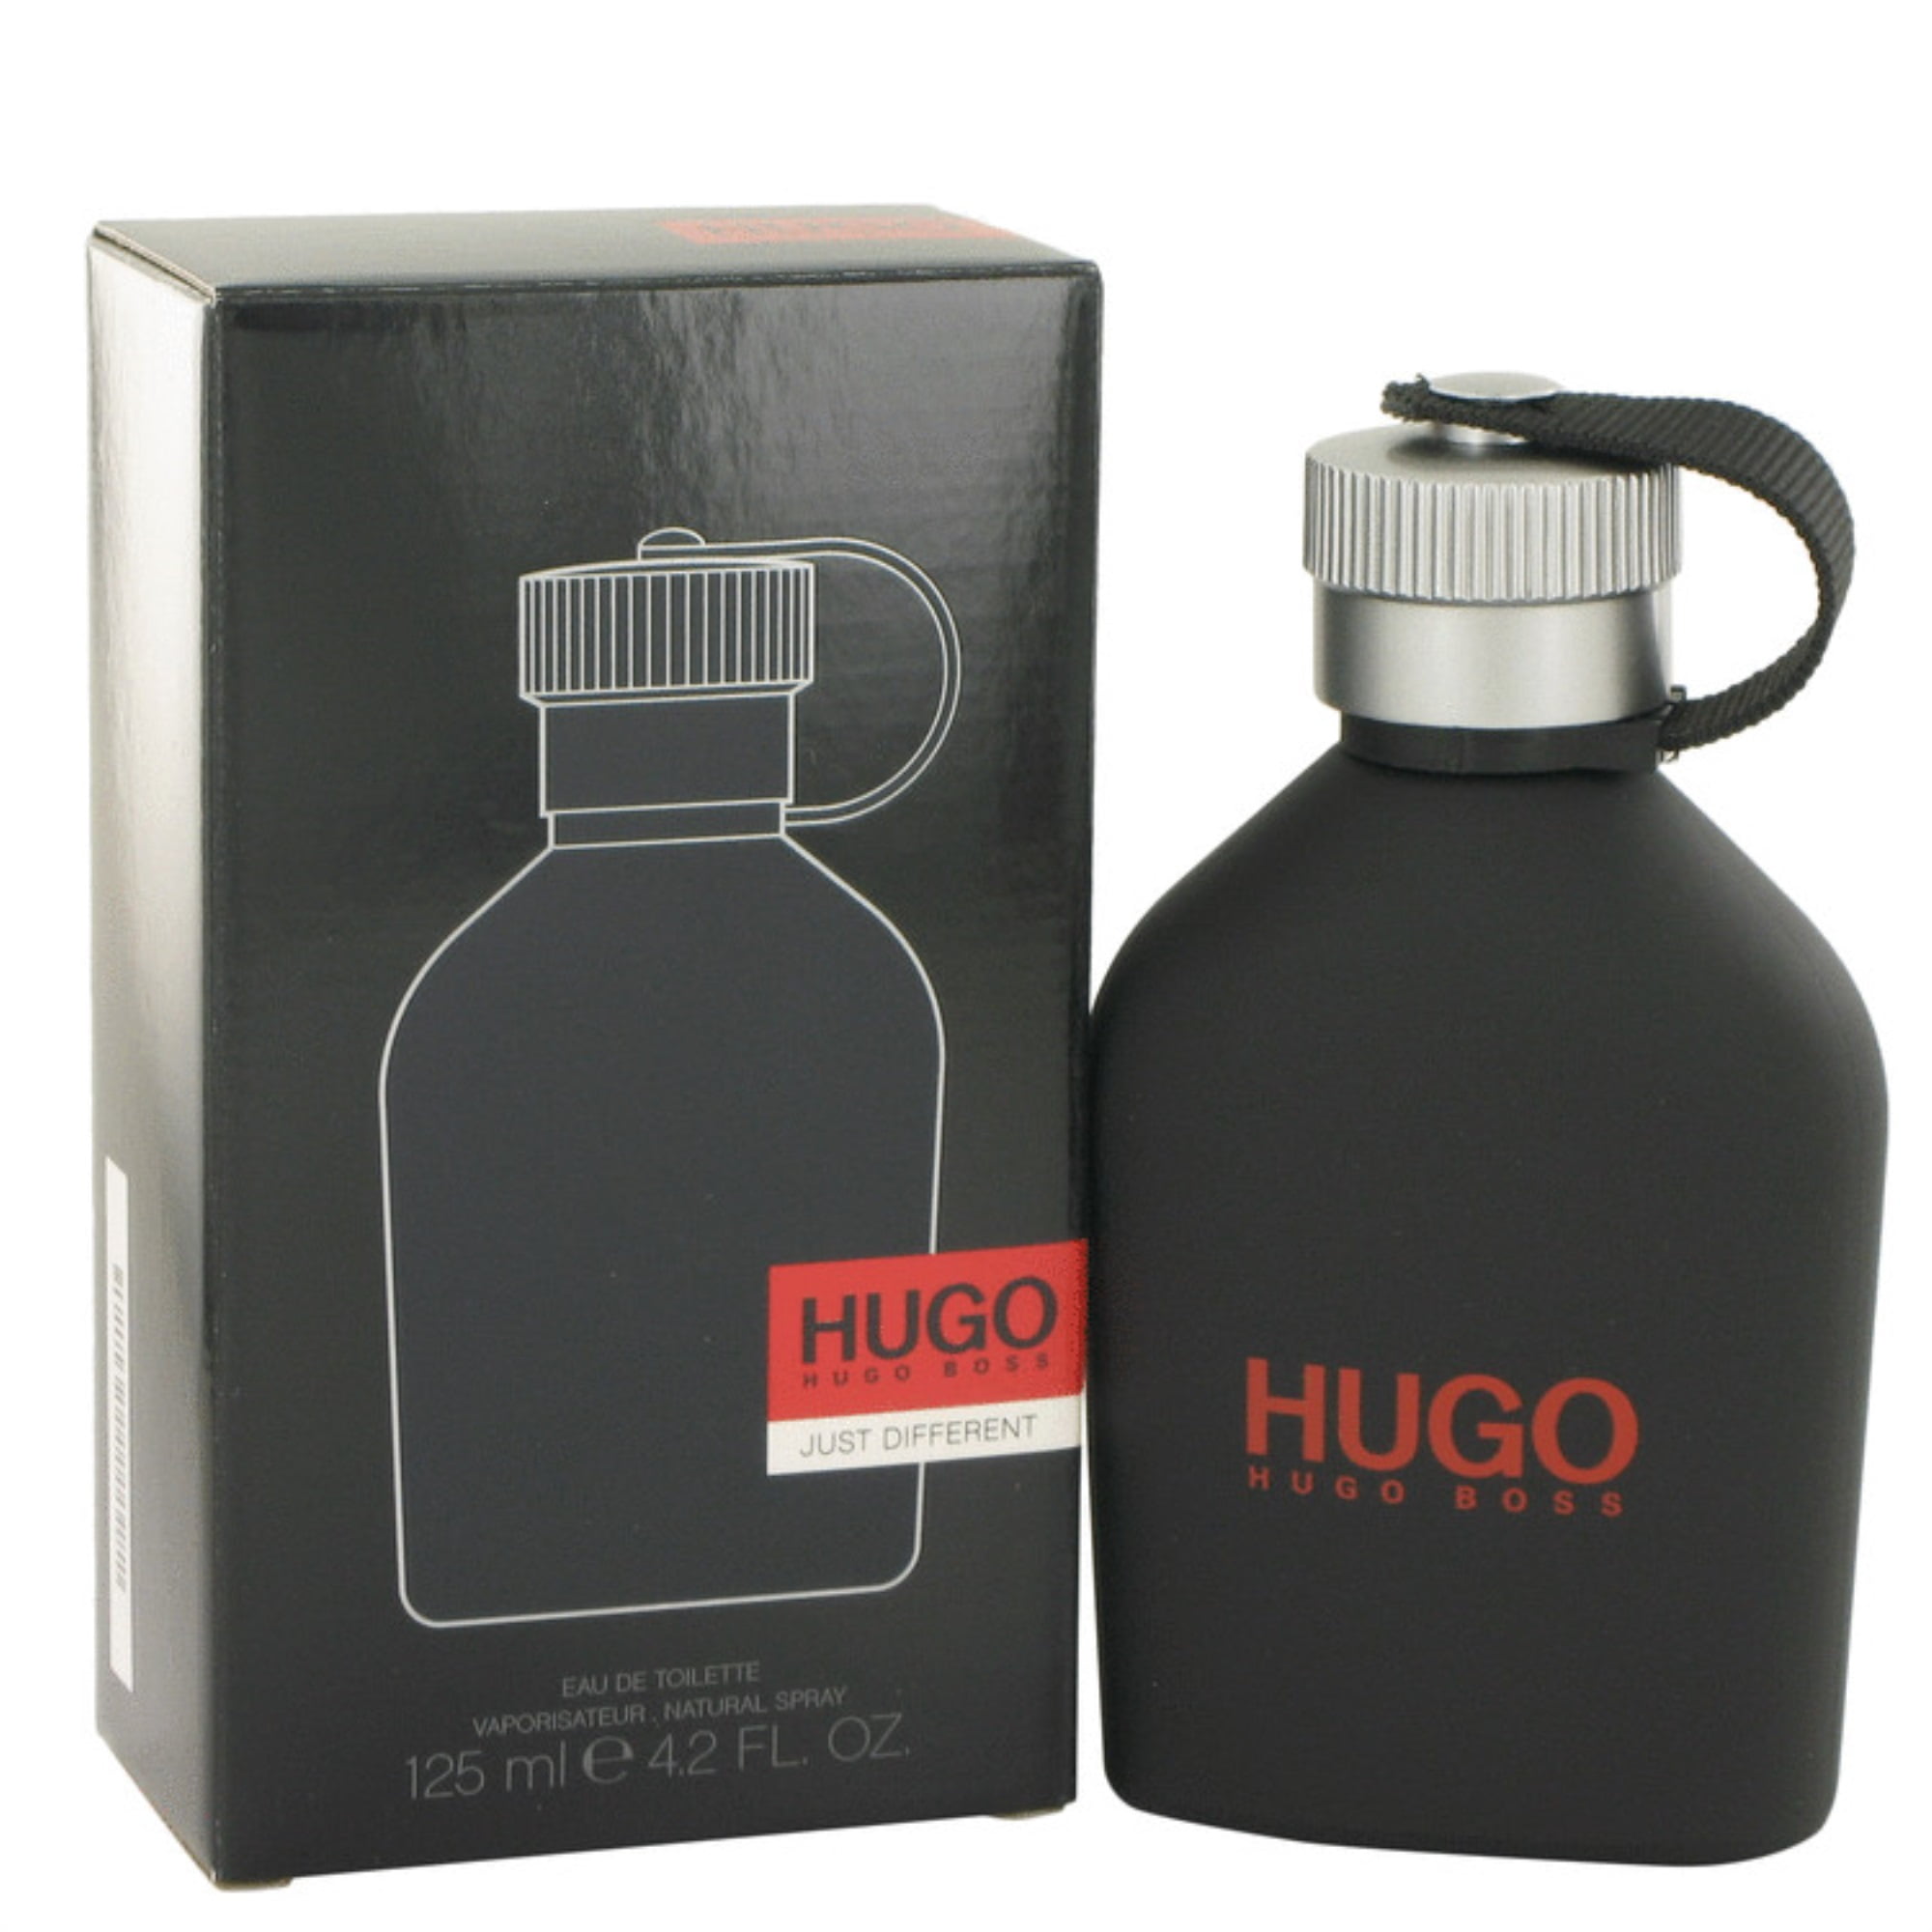 Hugo Just Different Cologne by Hugo Boss, 4.2 oz Eau De Toilette Spray ...